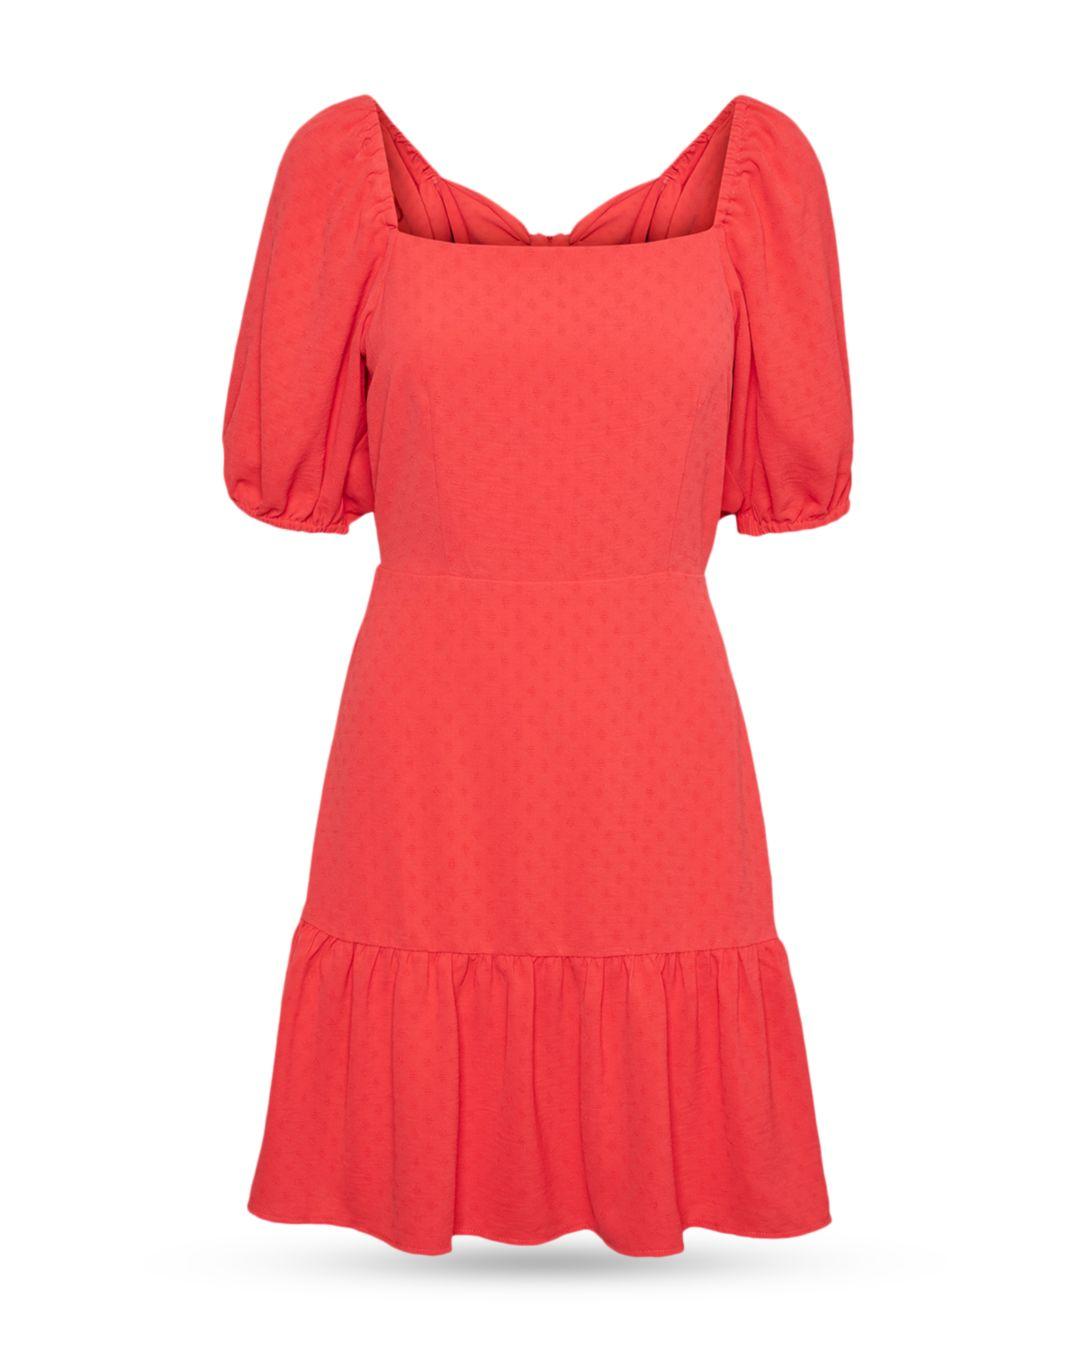 Vero Moda Grit Puff Sleeve Dress in Red | Lyst